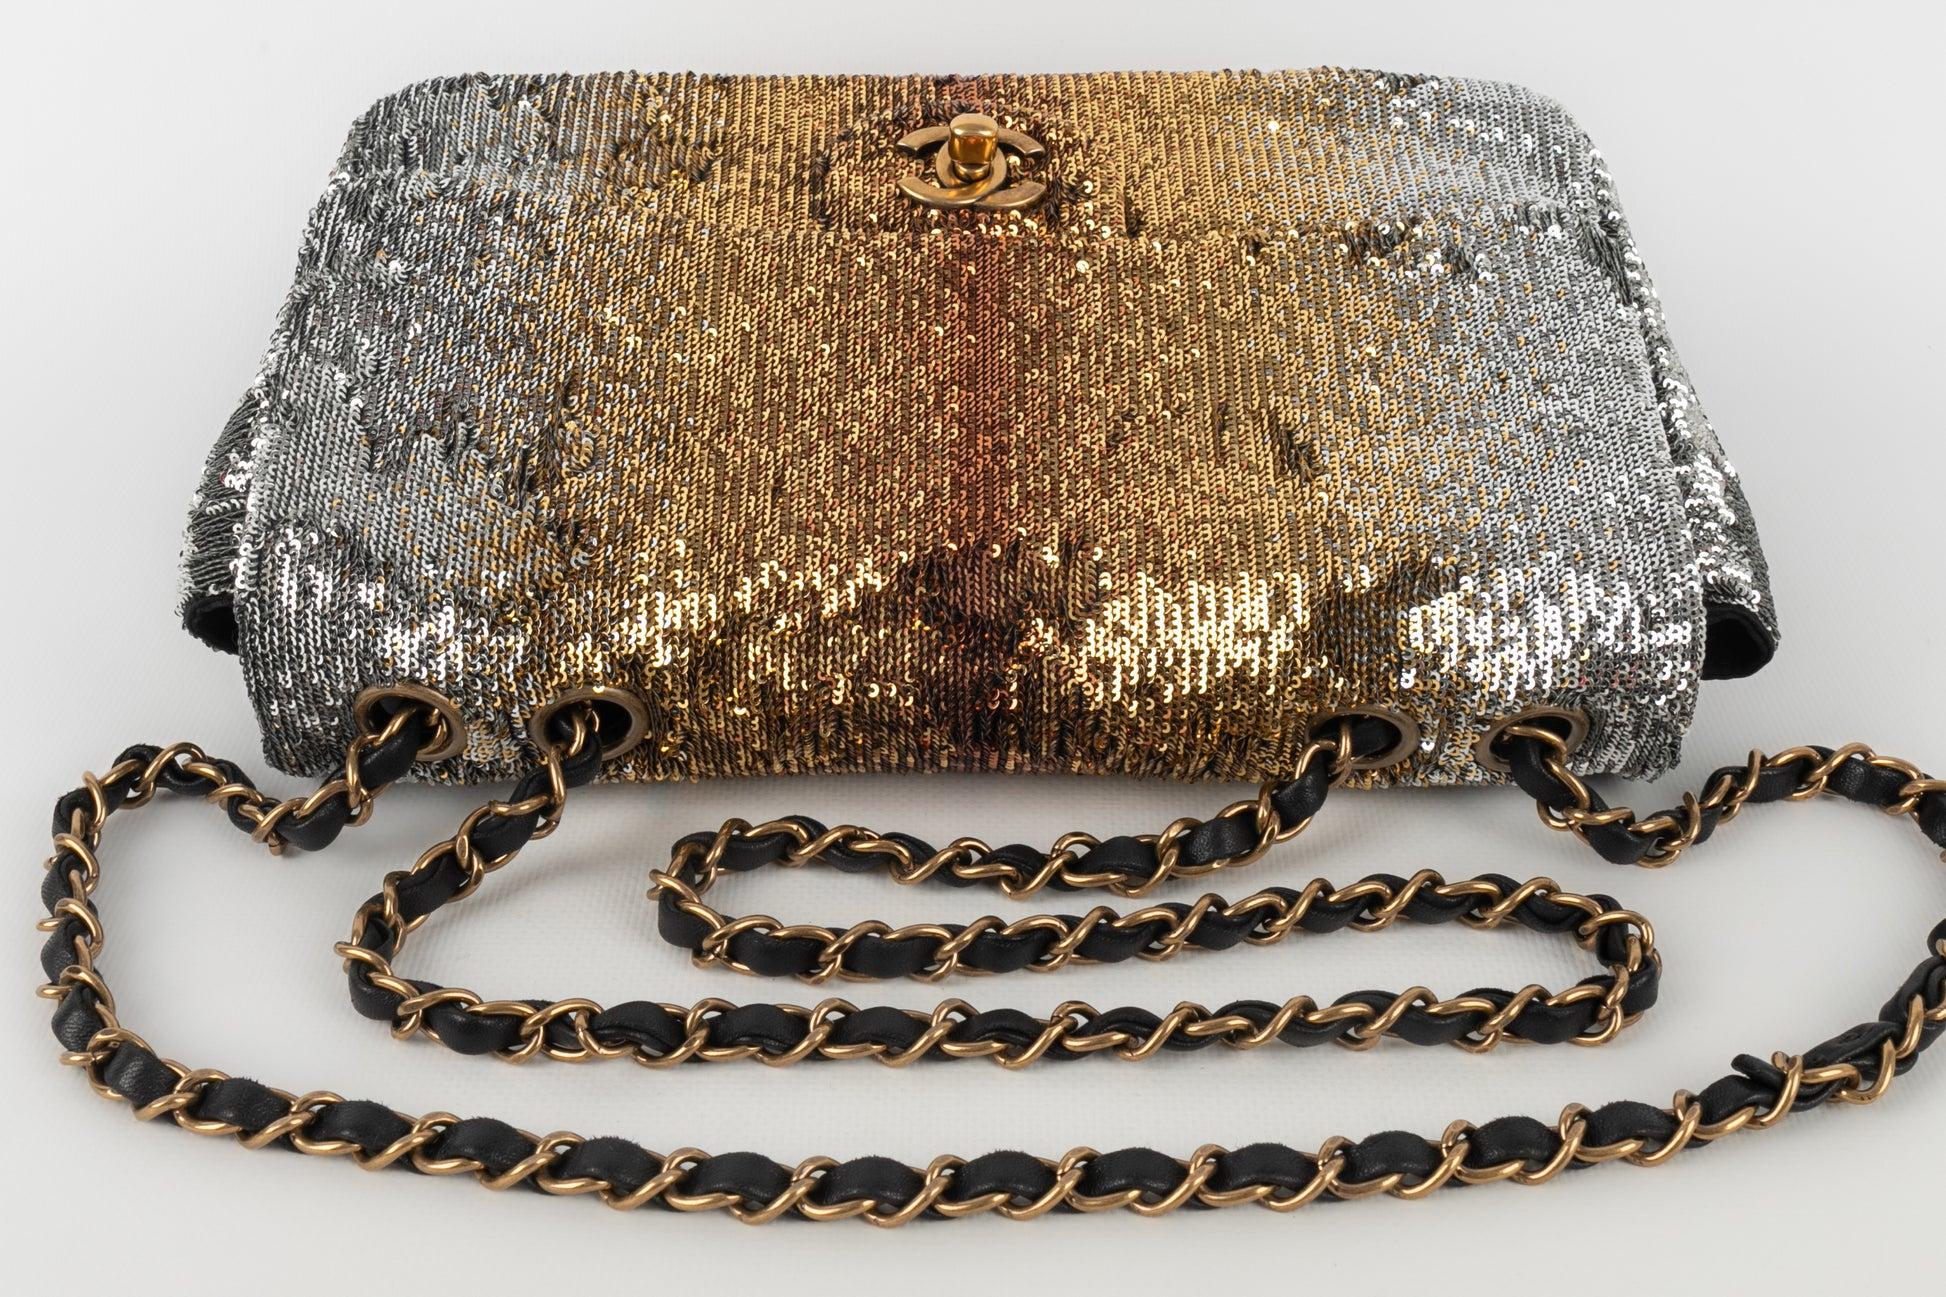 Chanel Timeless Bag Covered in Sequins, Black Leather & Gold Metal Details, 2017 4